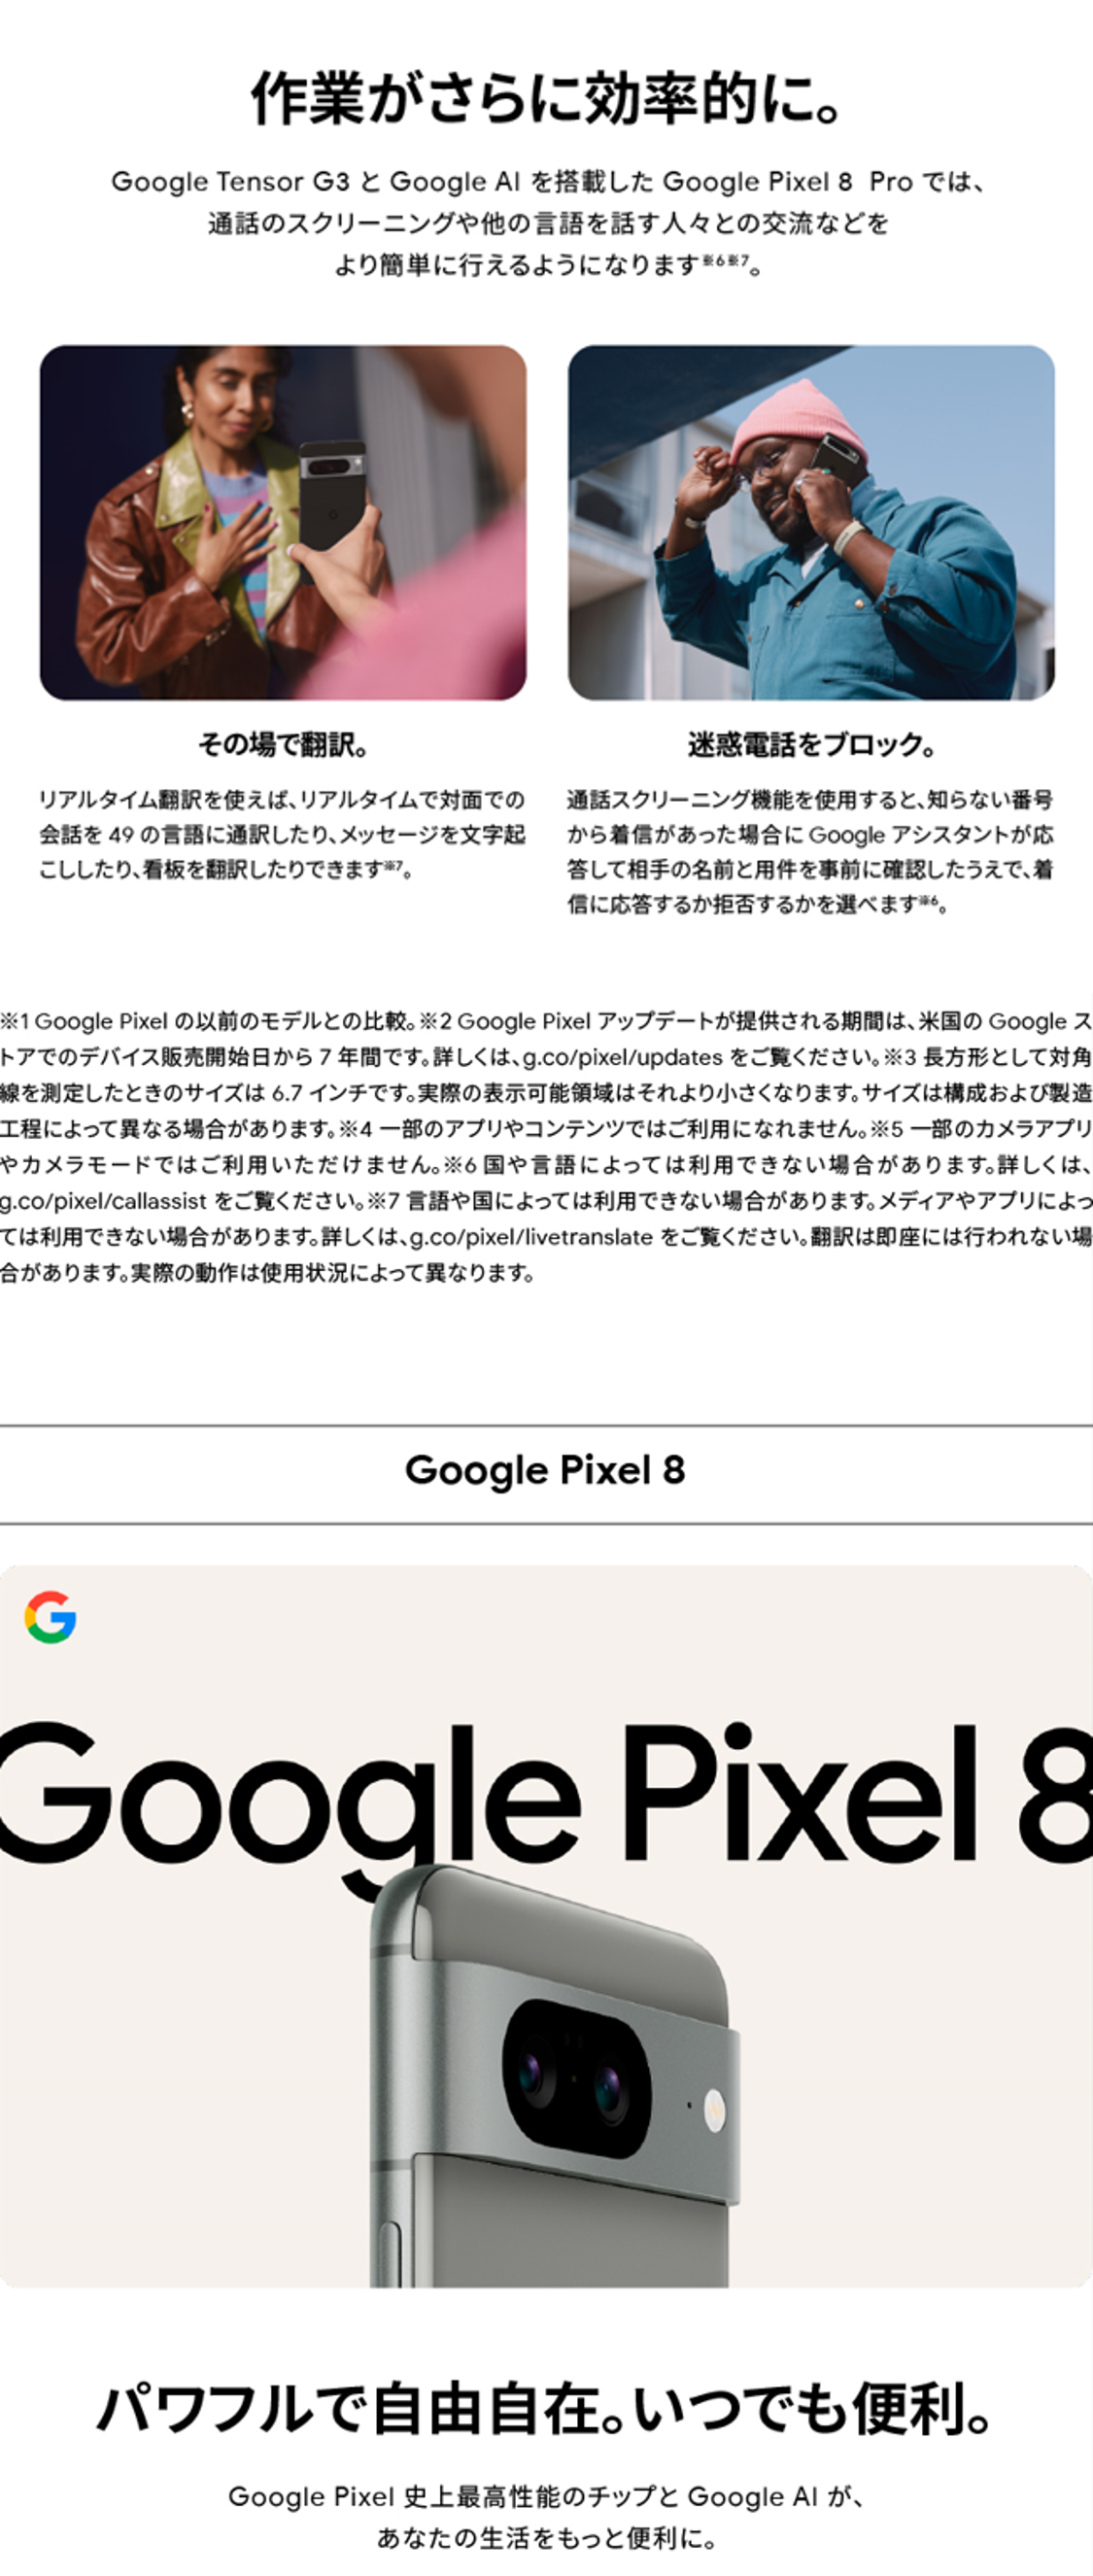 au 取扱店または au Online Shop 購入者限定 】 Google Pixel 8 Pro